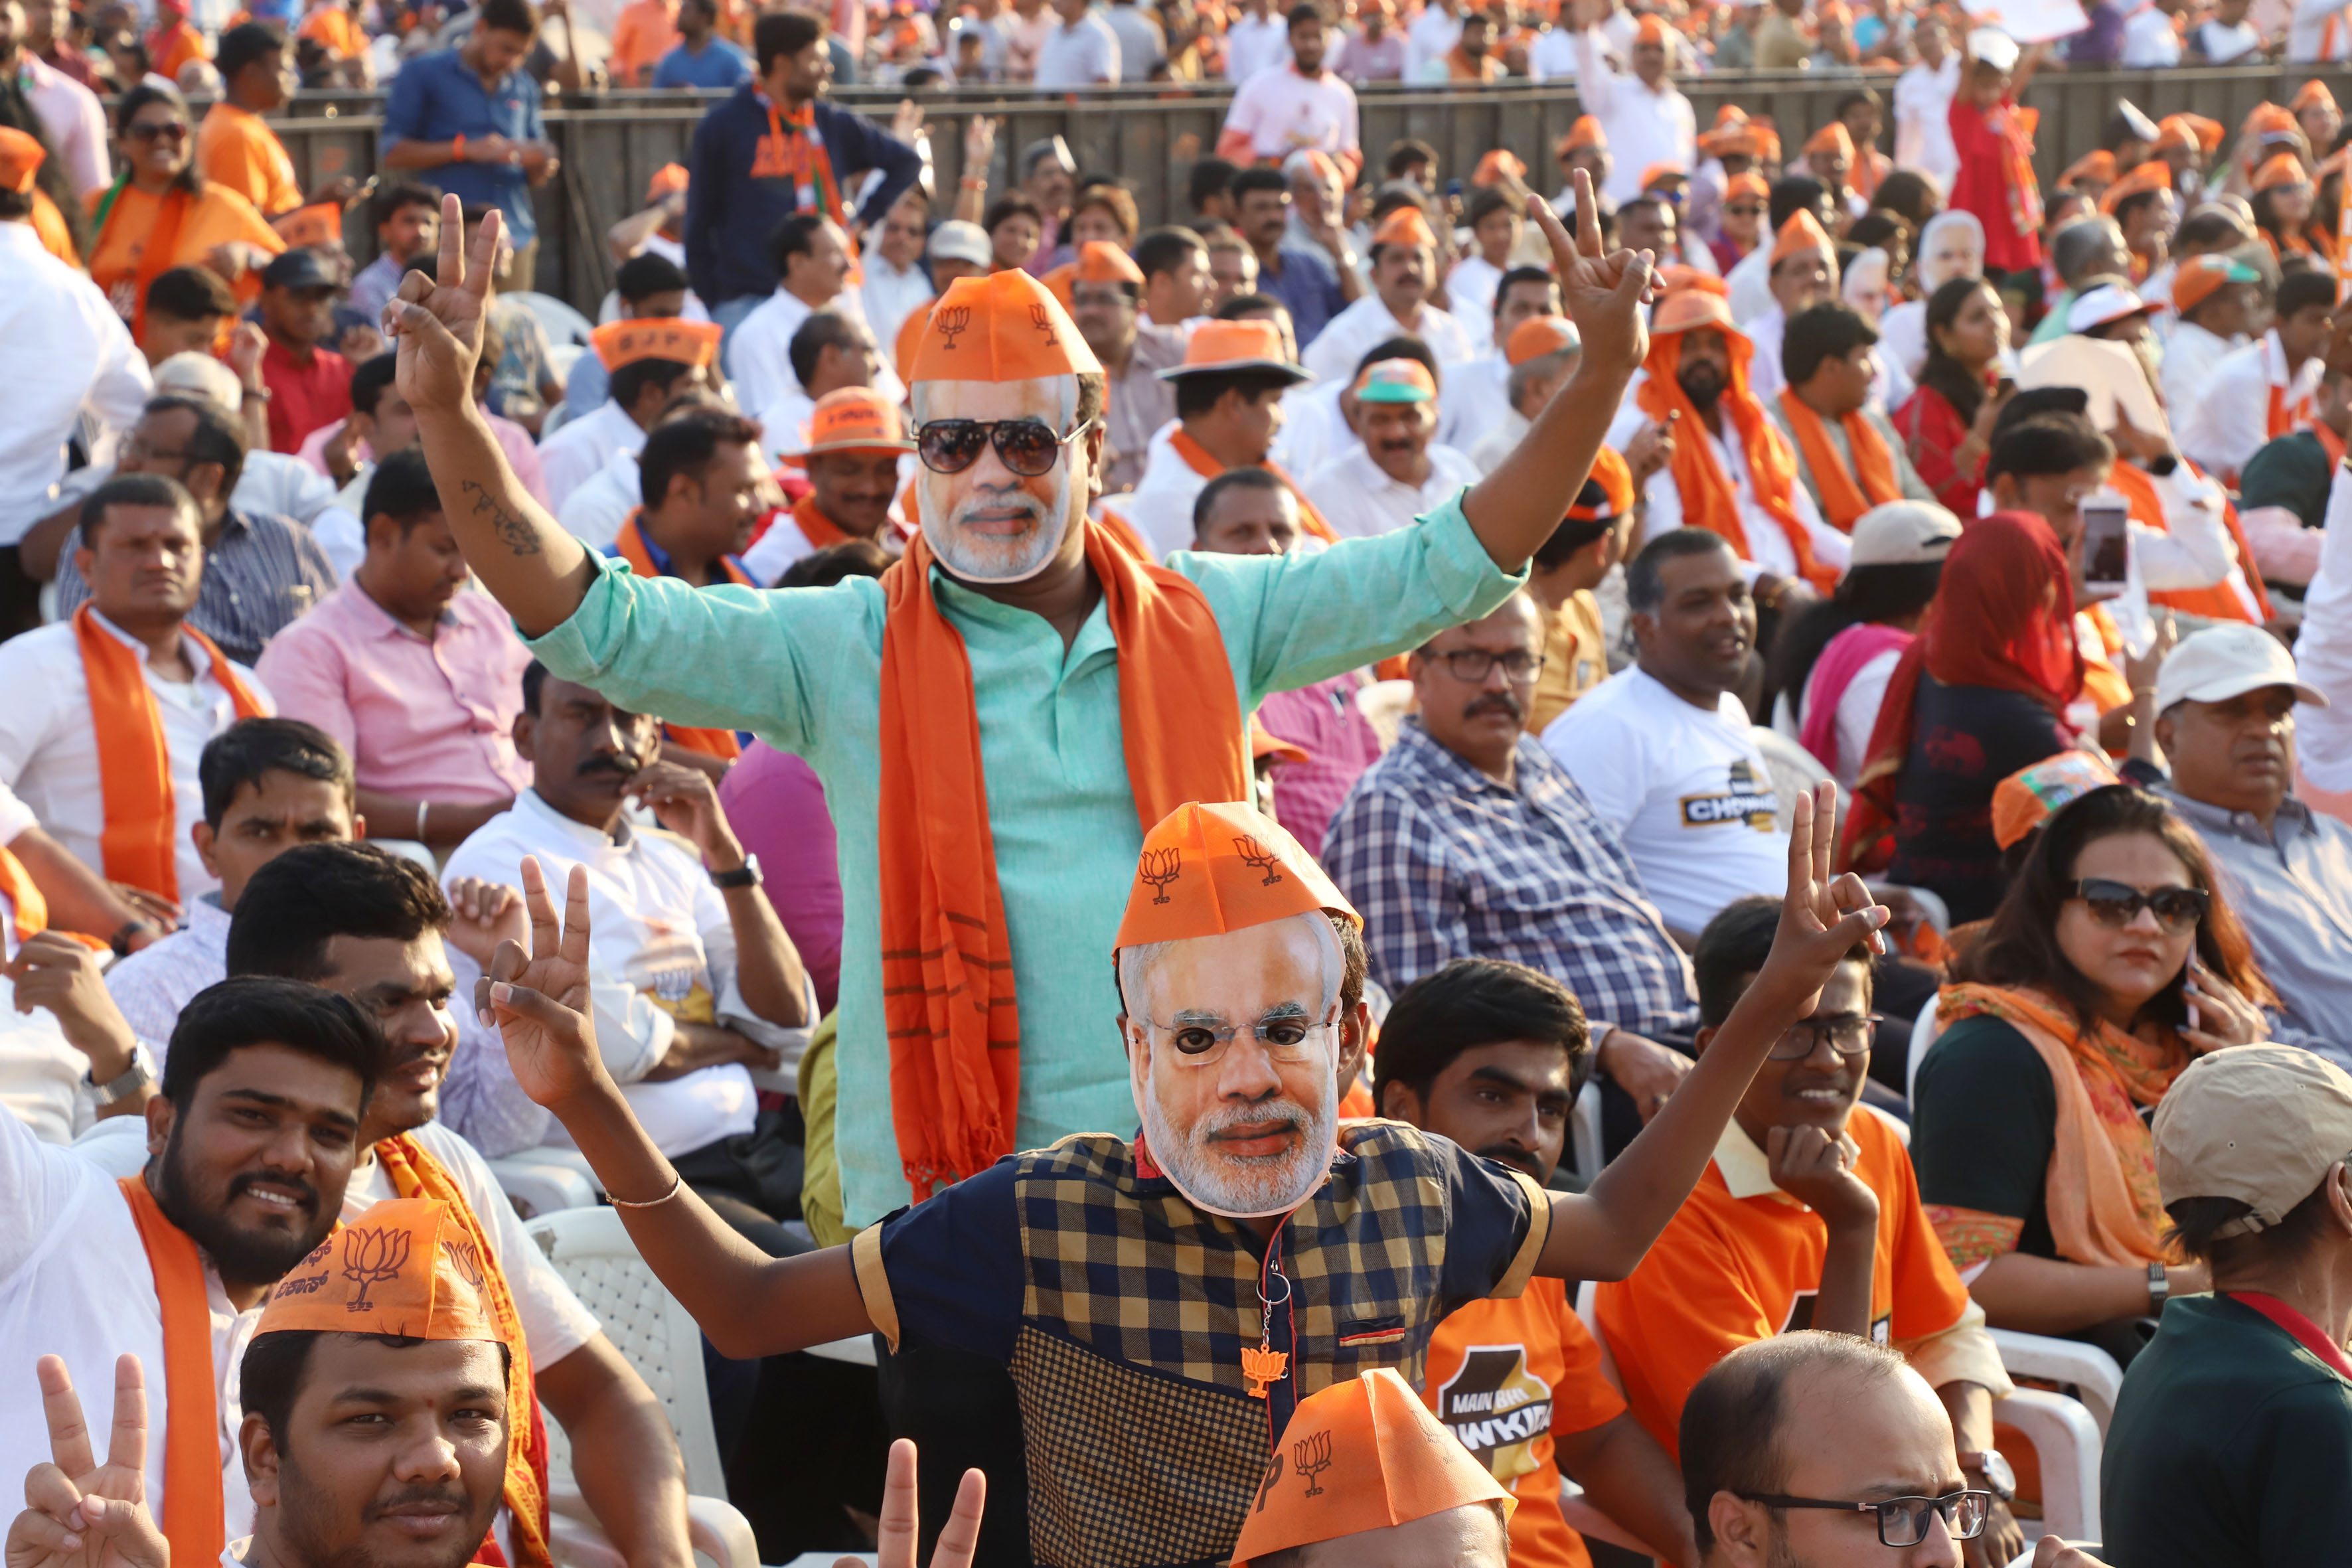 Raebareli and Varanasi tell the tale of two Indias contesting 2019 polls